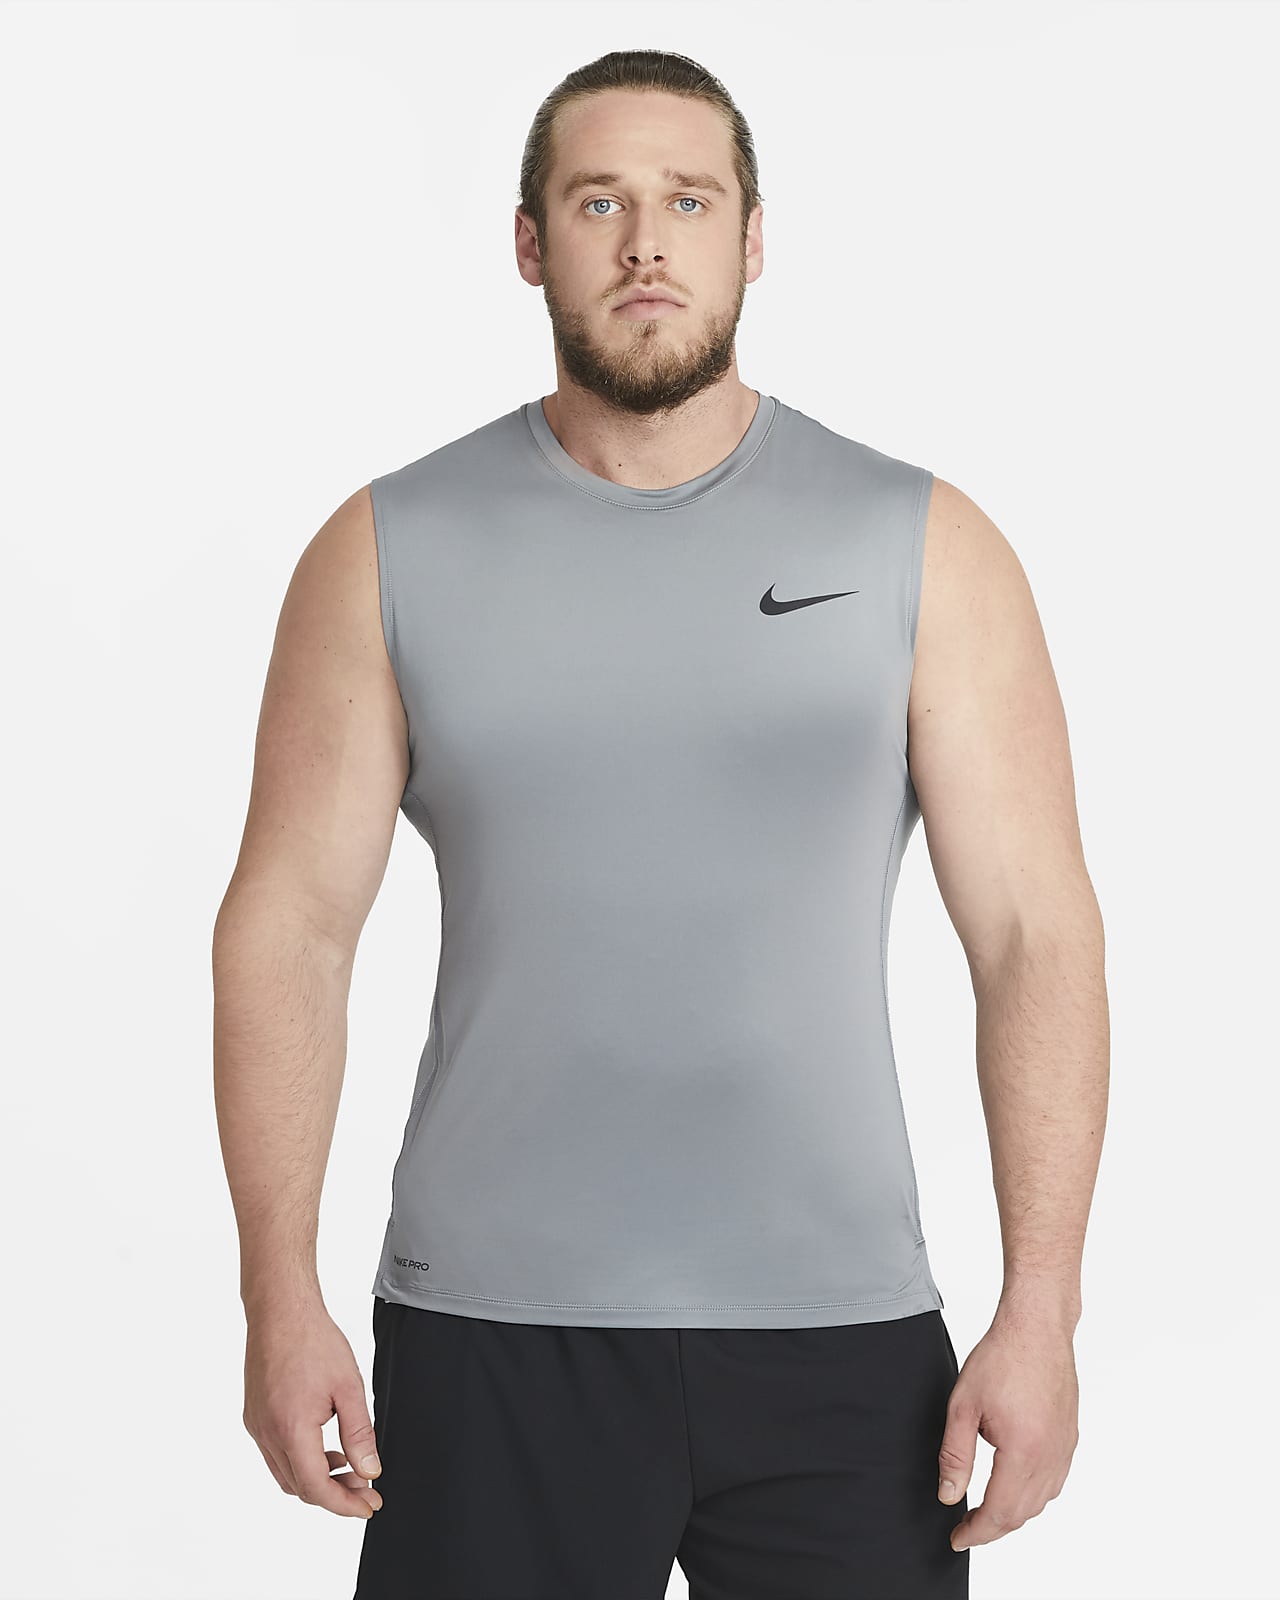 nike men's sleeveless compression shirt